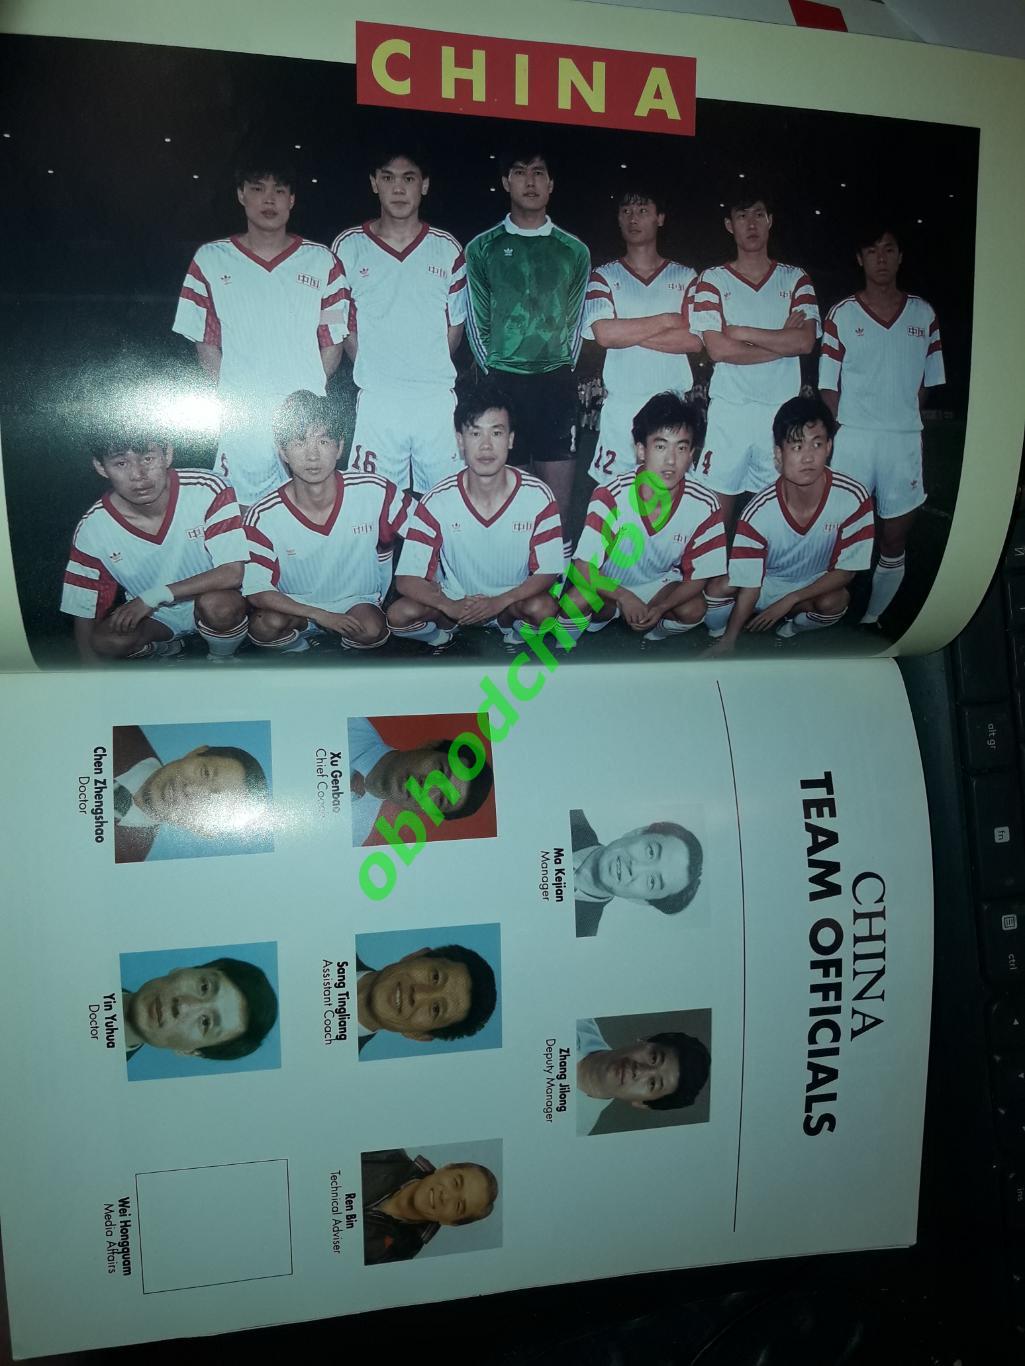 Олимпиада Барселона 1992 отбор турнир в Малайзии: Япония Китай Ю Корея Катар др 1